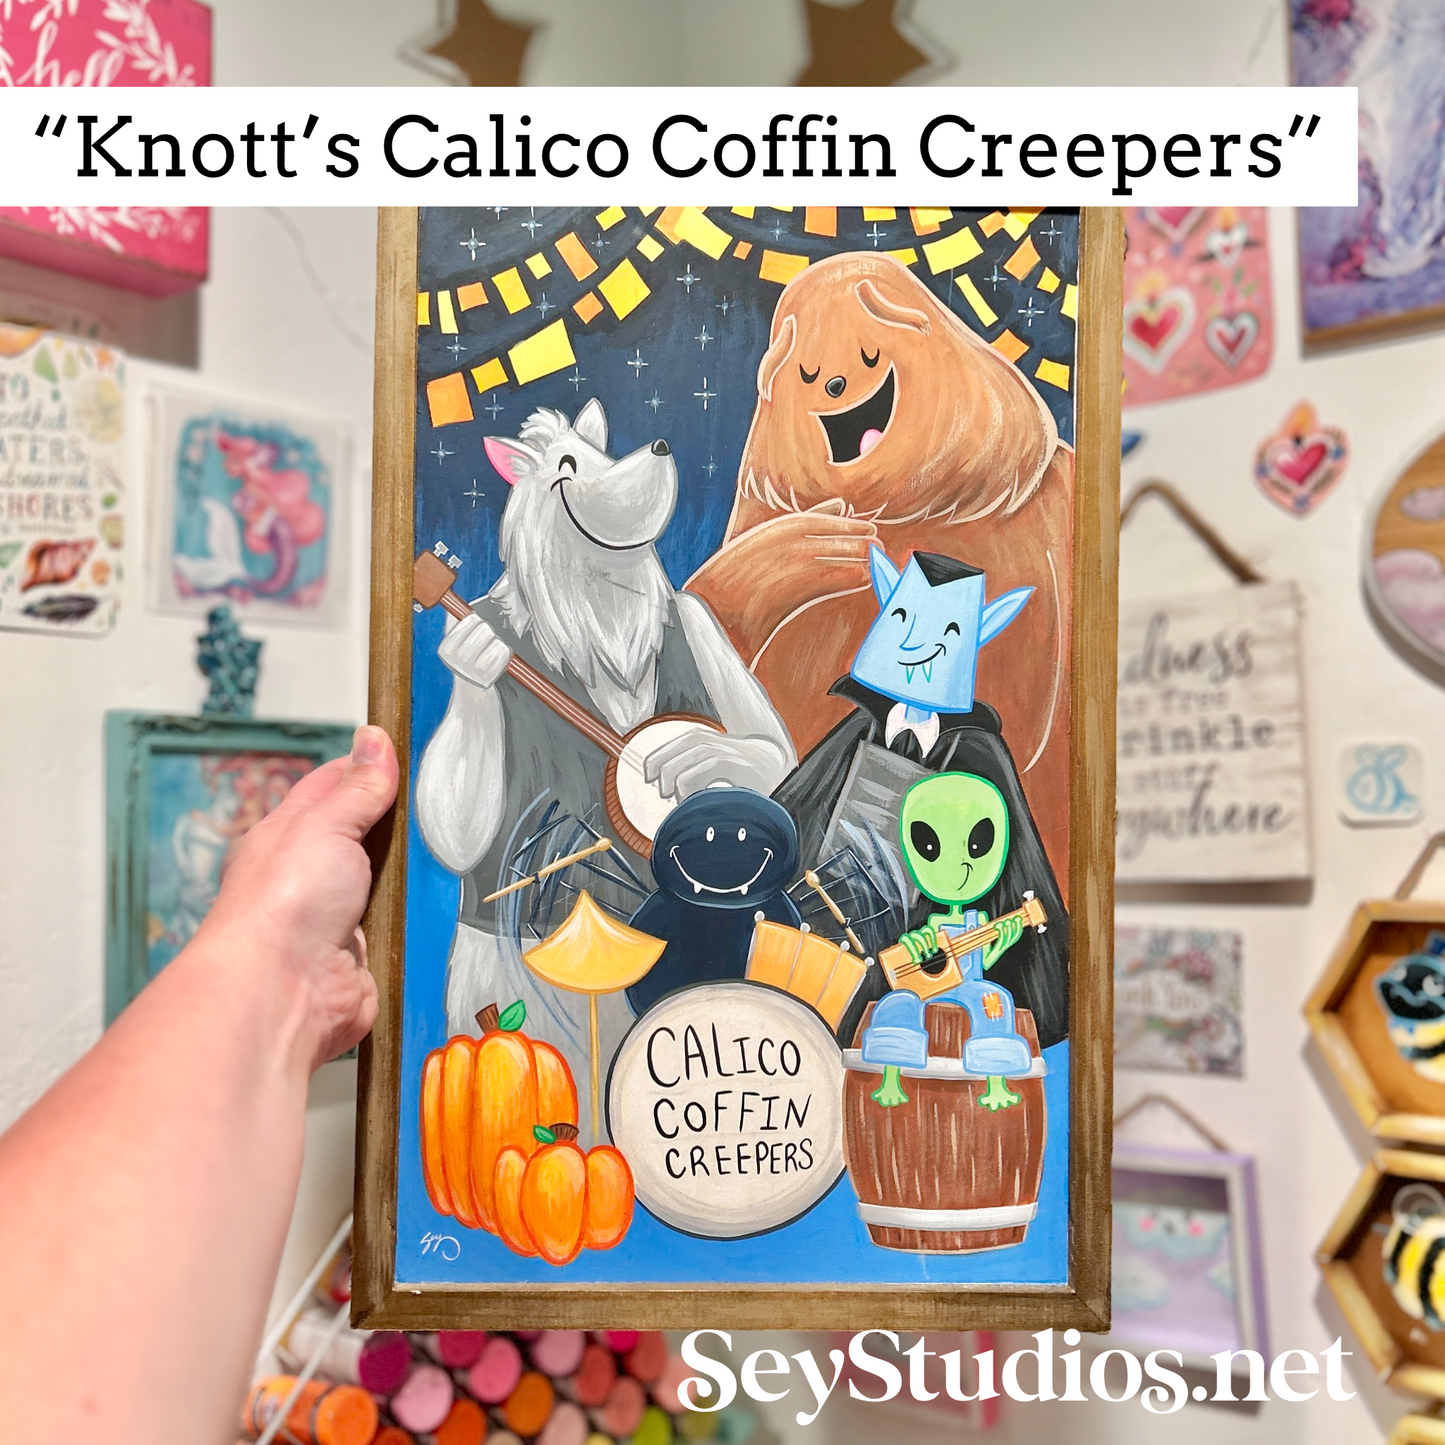 Original - “Knott’s Calico Coffin Creepers”